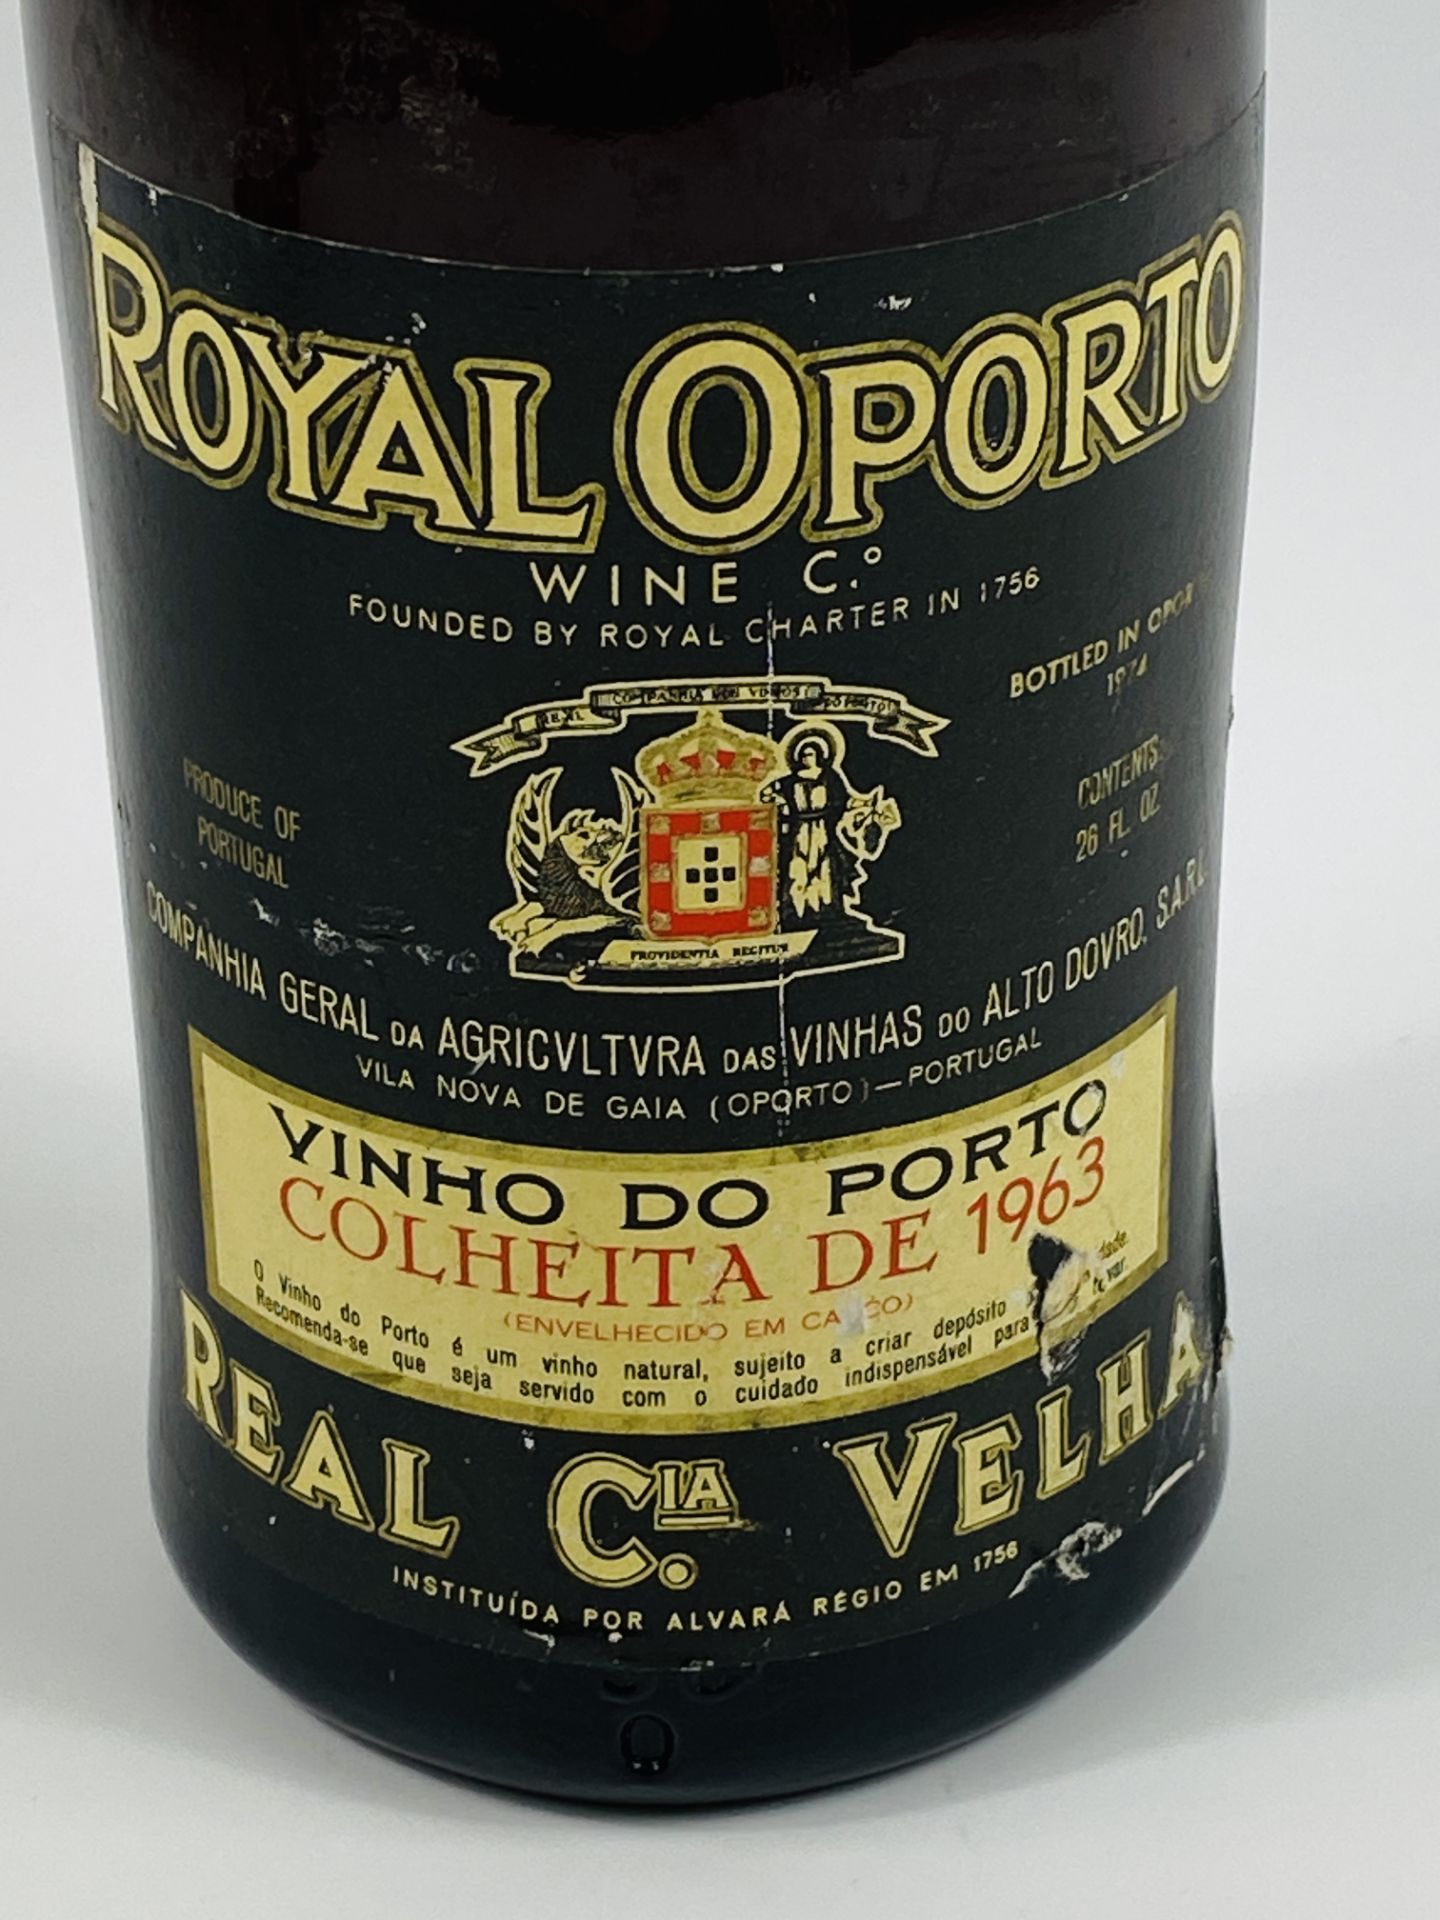 26fl oz bottle of Royal Oporto Vinho do Porto, 1963 - Image 2 of 3